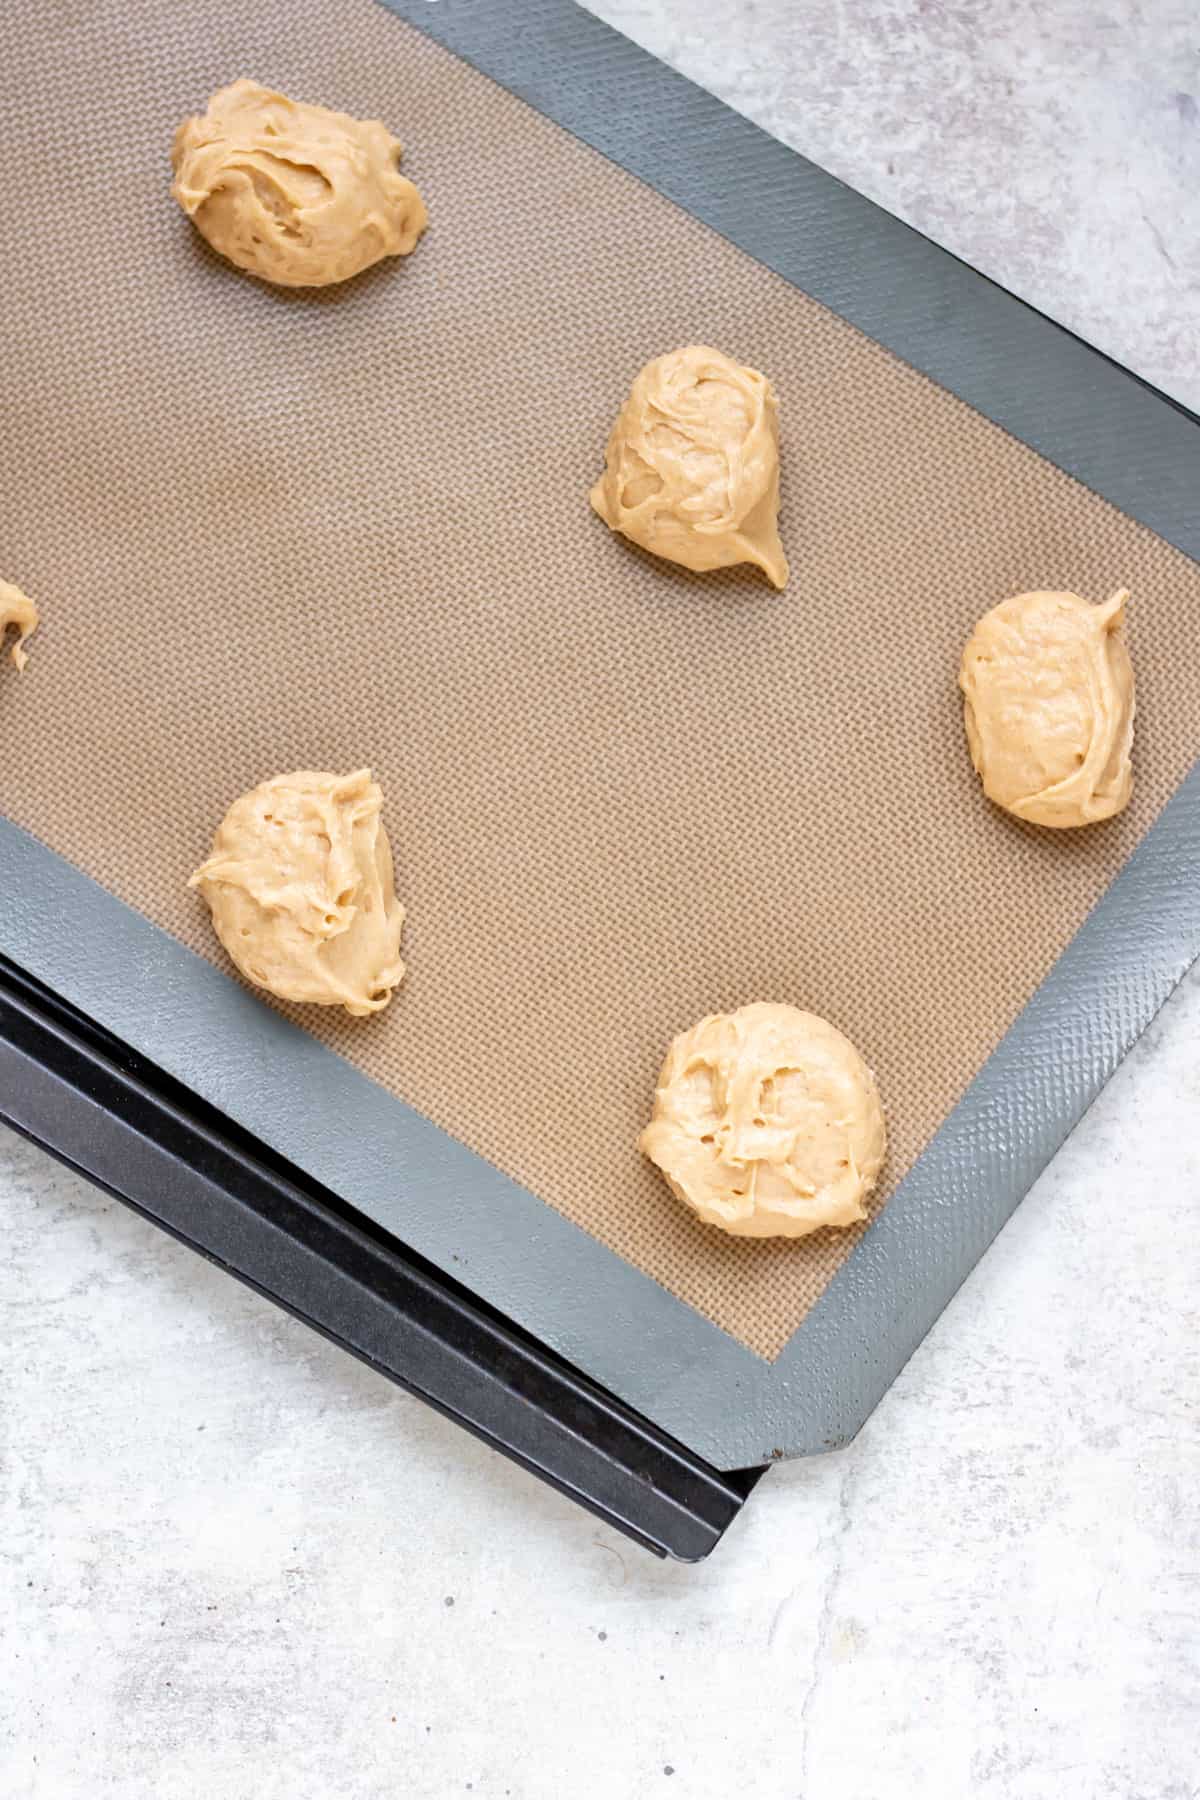 Cookie dough on baking sheet.